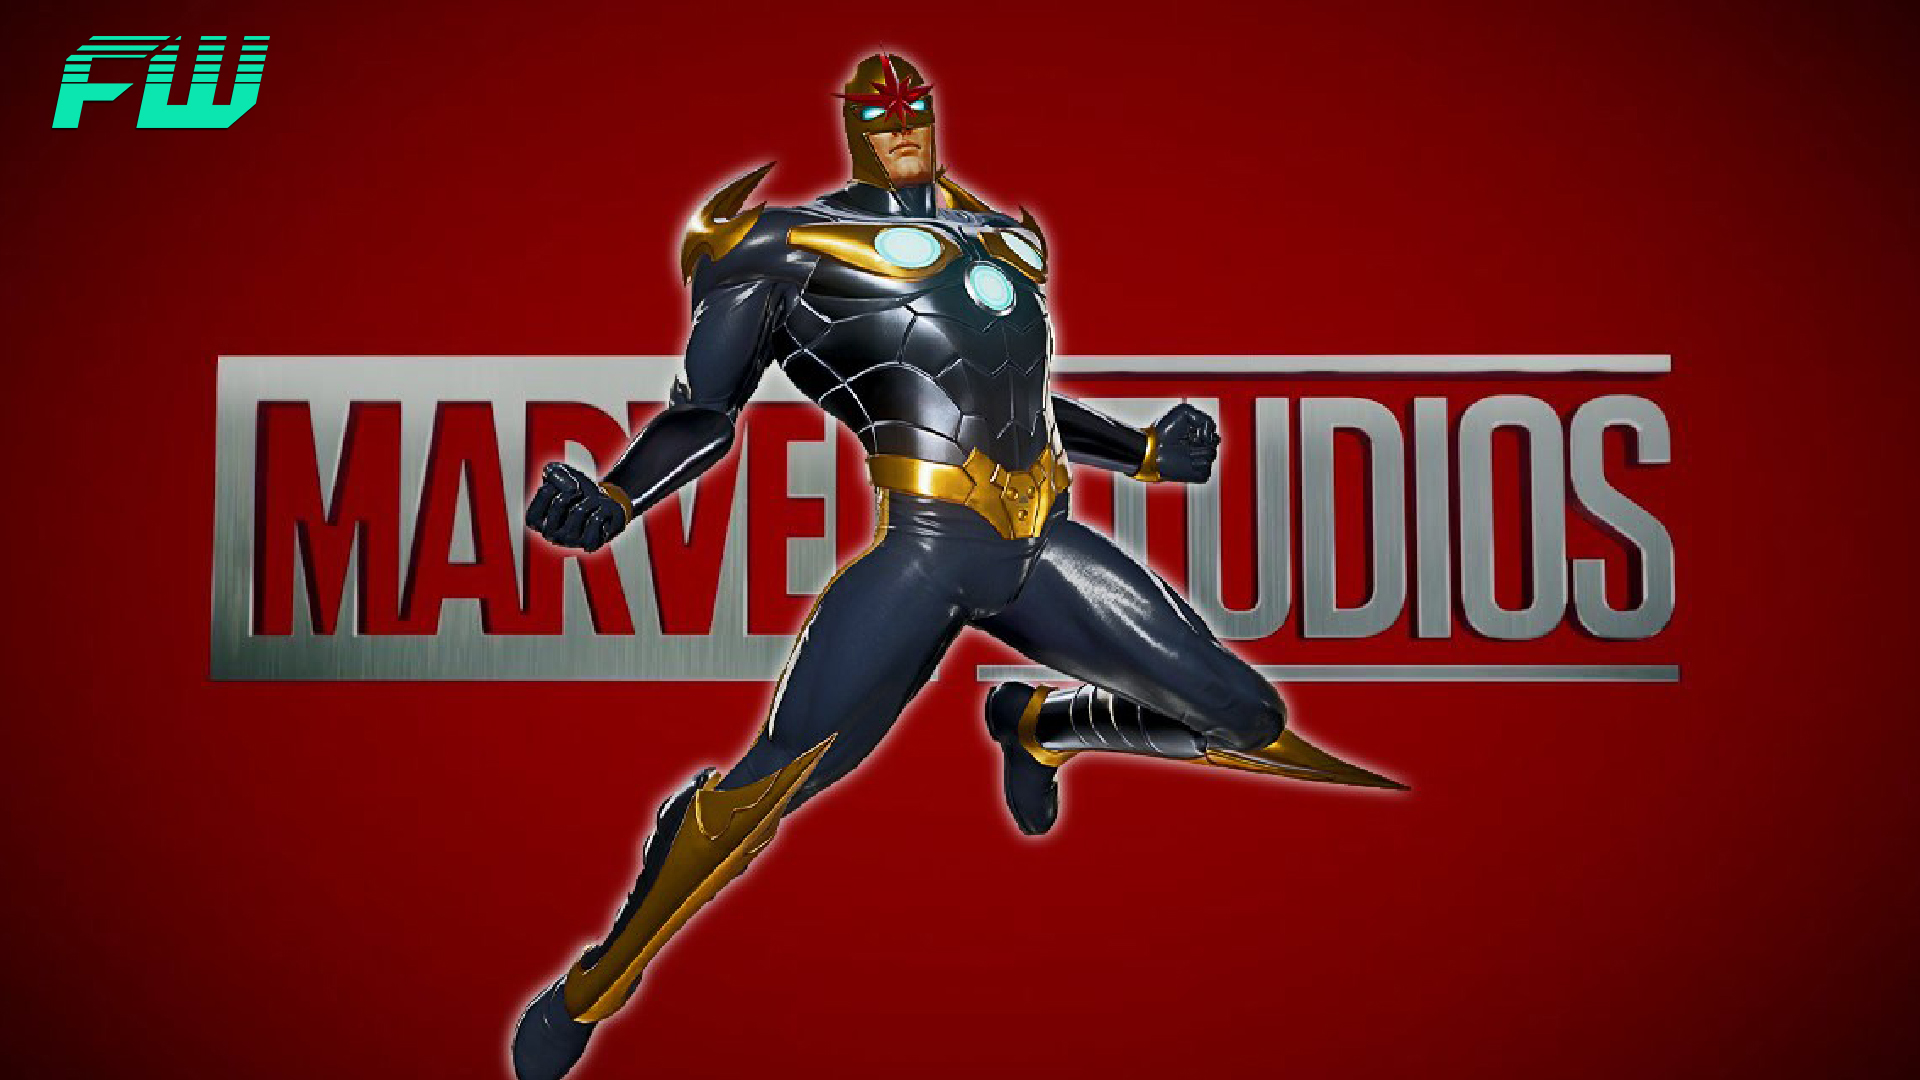 Nova Project In Development at Marvel Studios